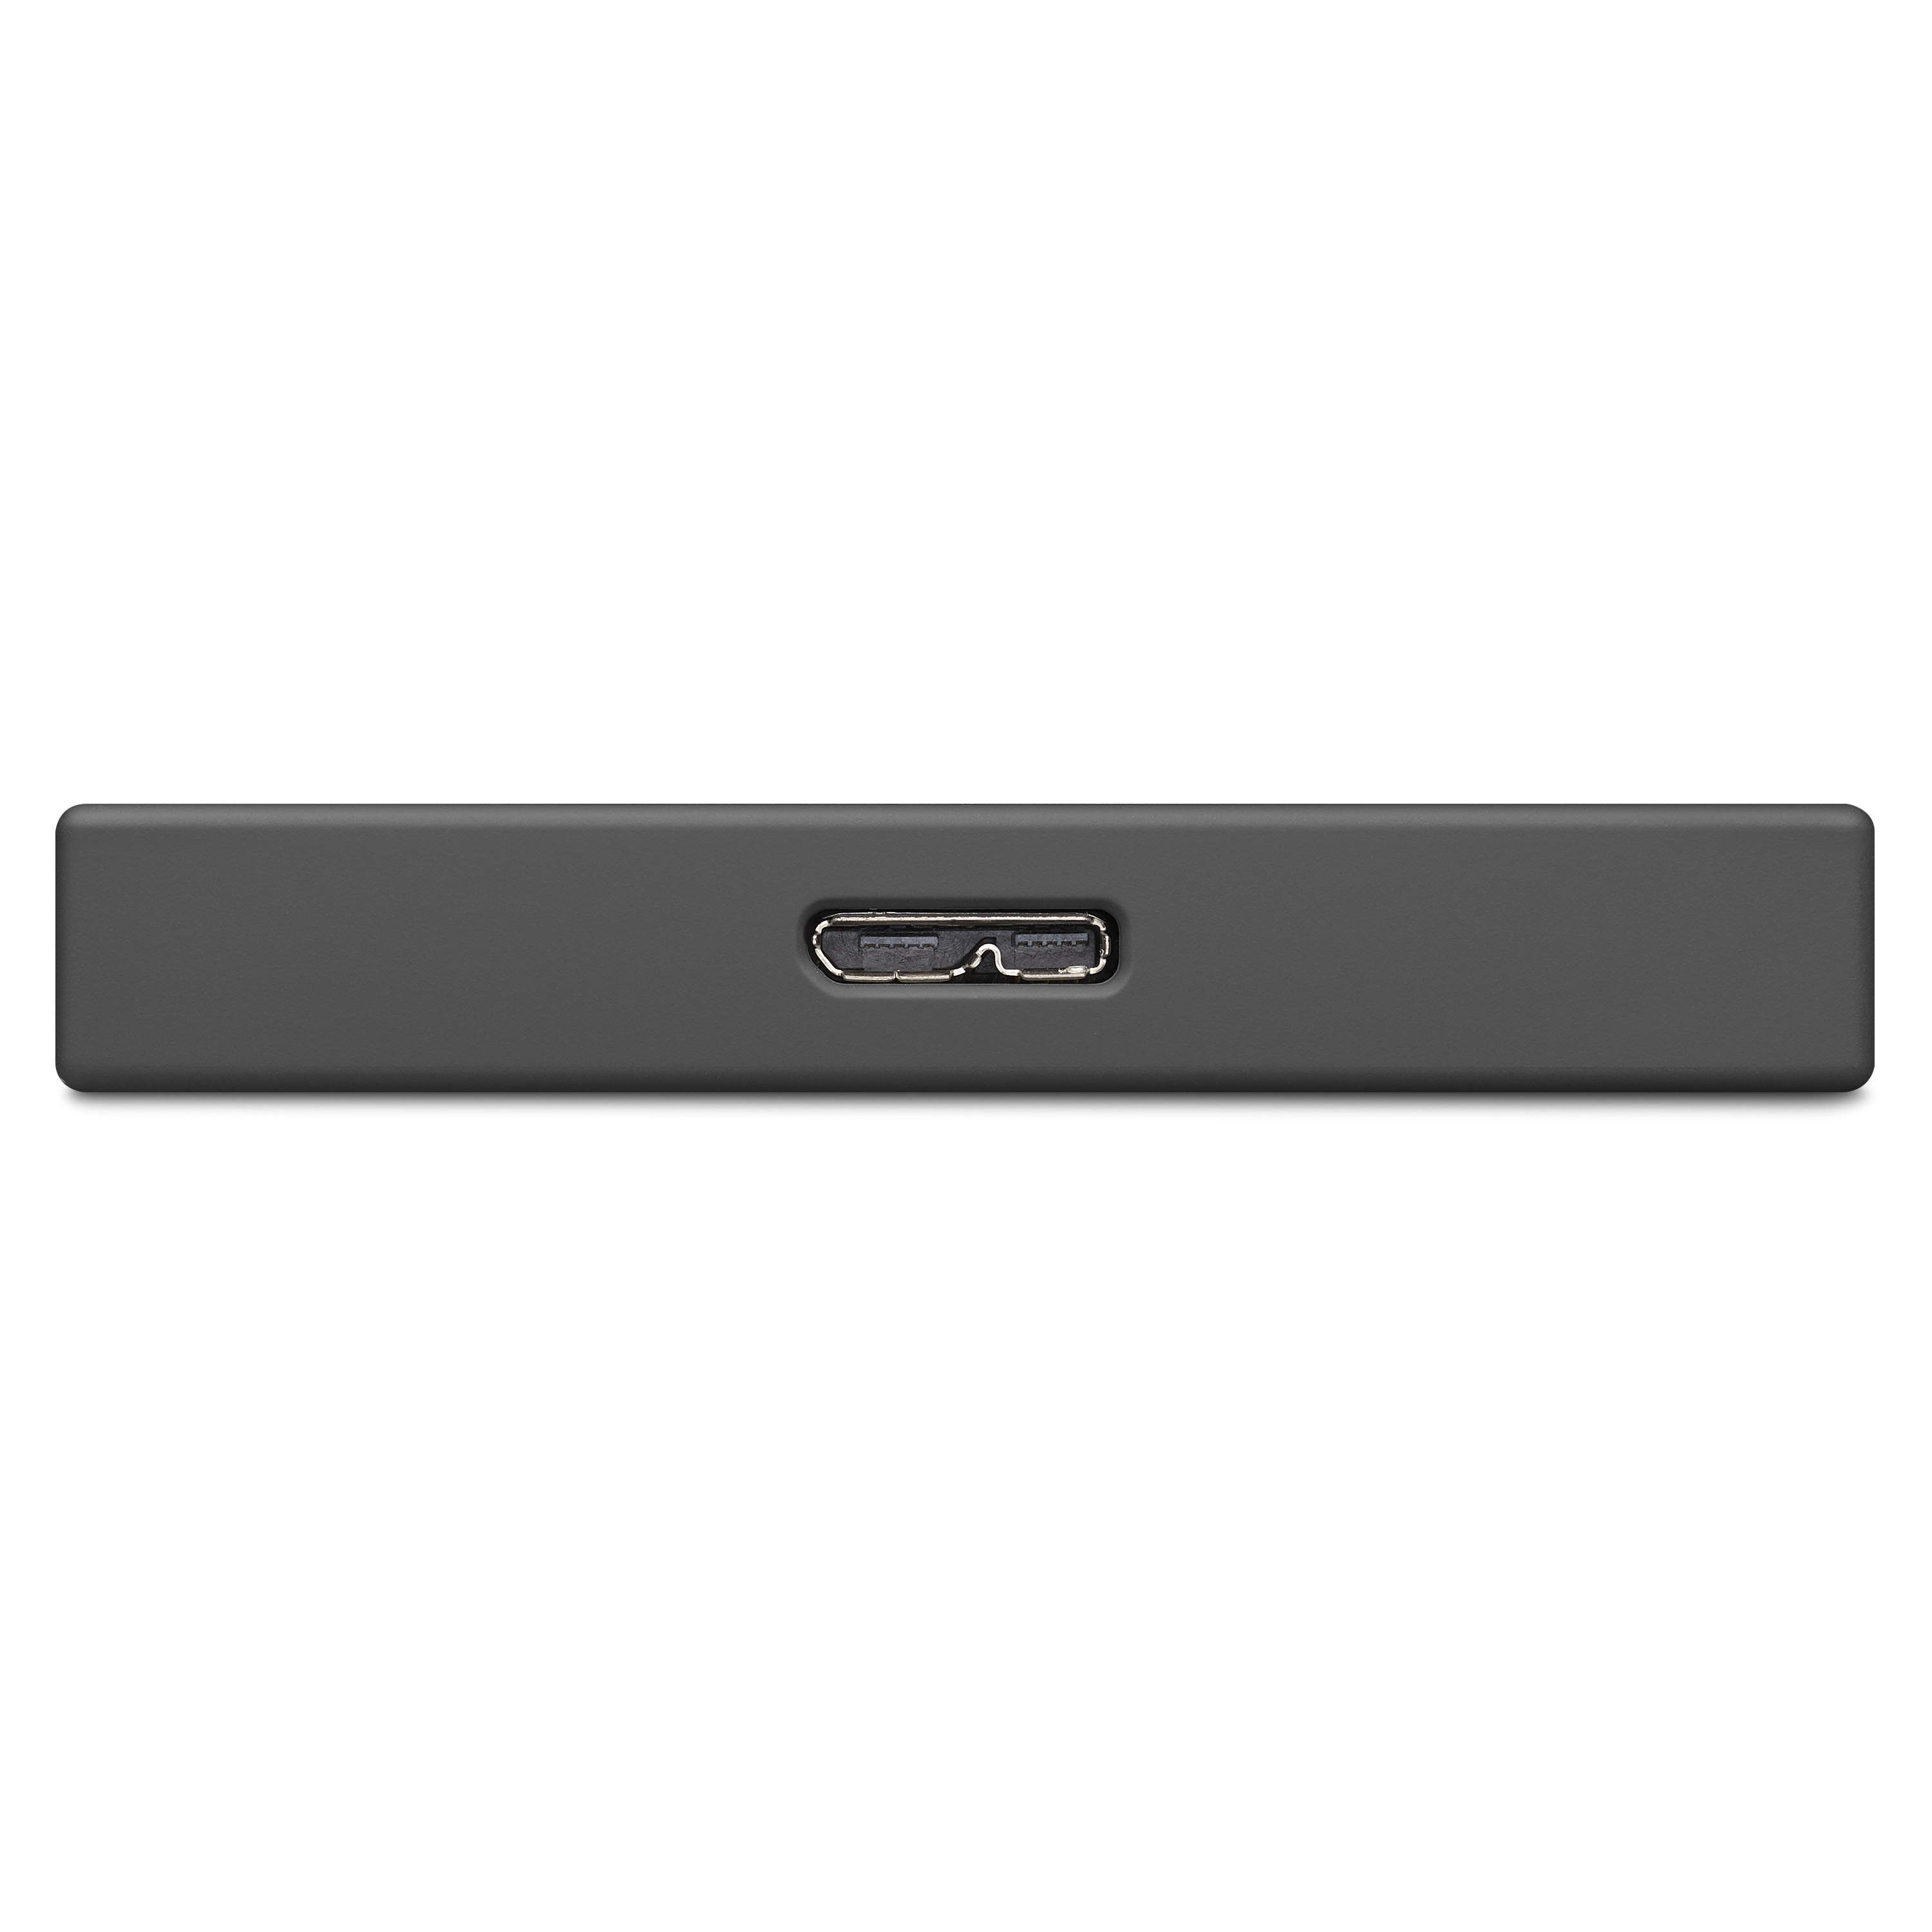 LACIE USB 3.0 HDD, Festplatte, 2,5 Zoll, 4 Silber/Schwarz Drive extern, TB